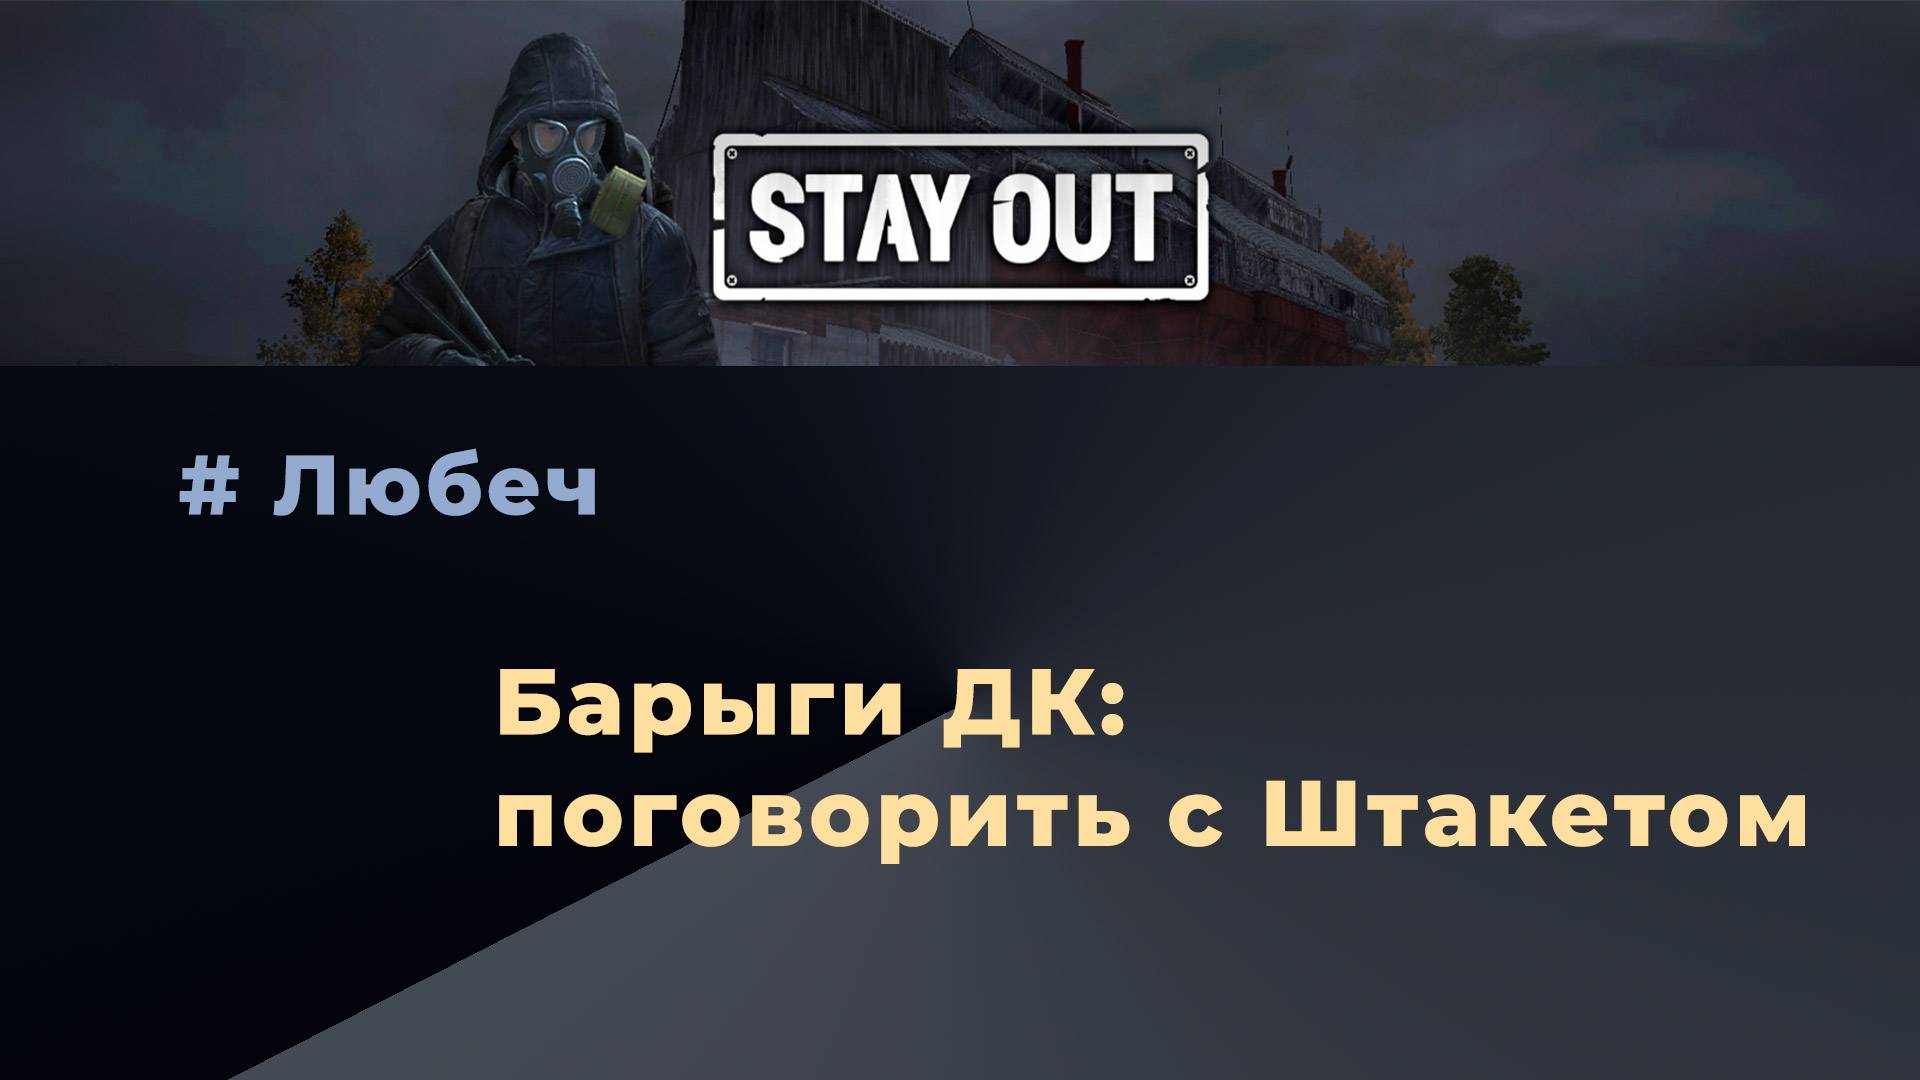 Stay Out_Любеч_Барыги ДК_поговорить со Штакетом